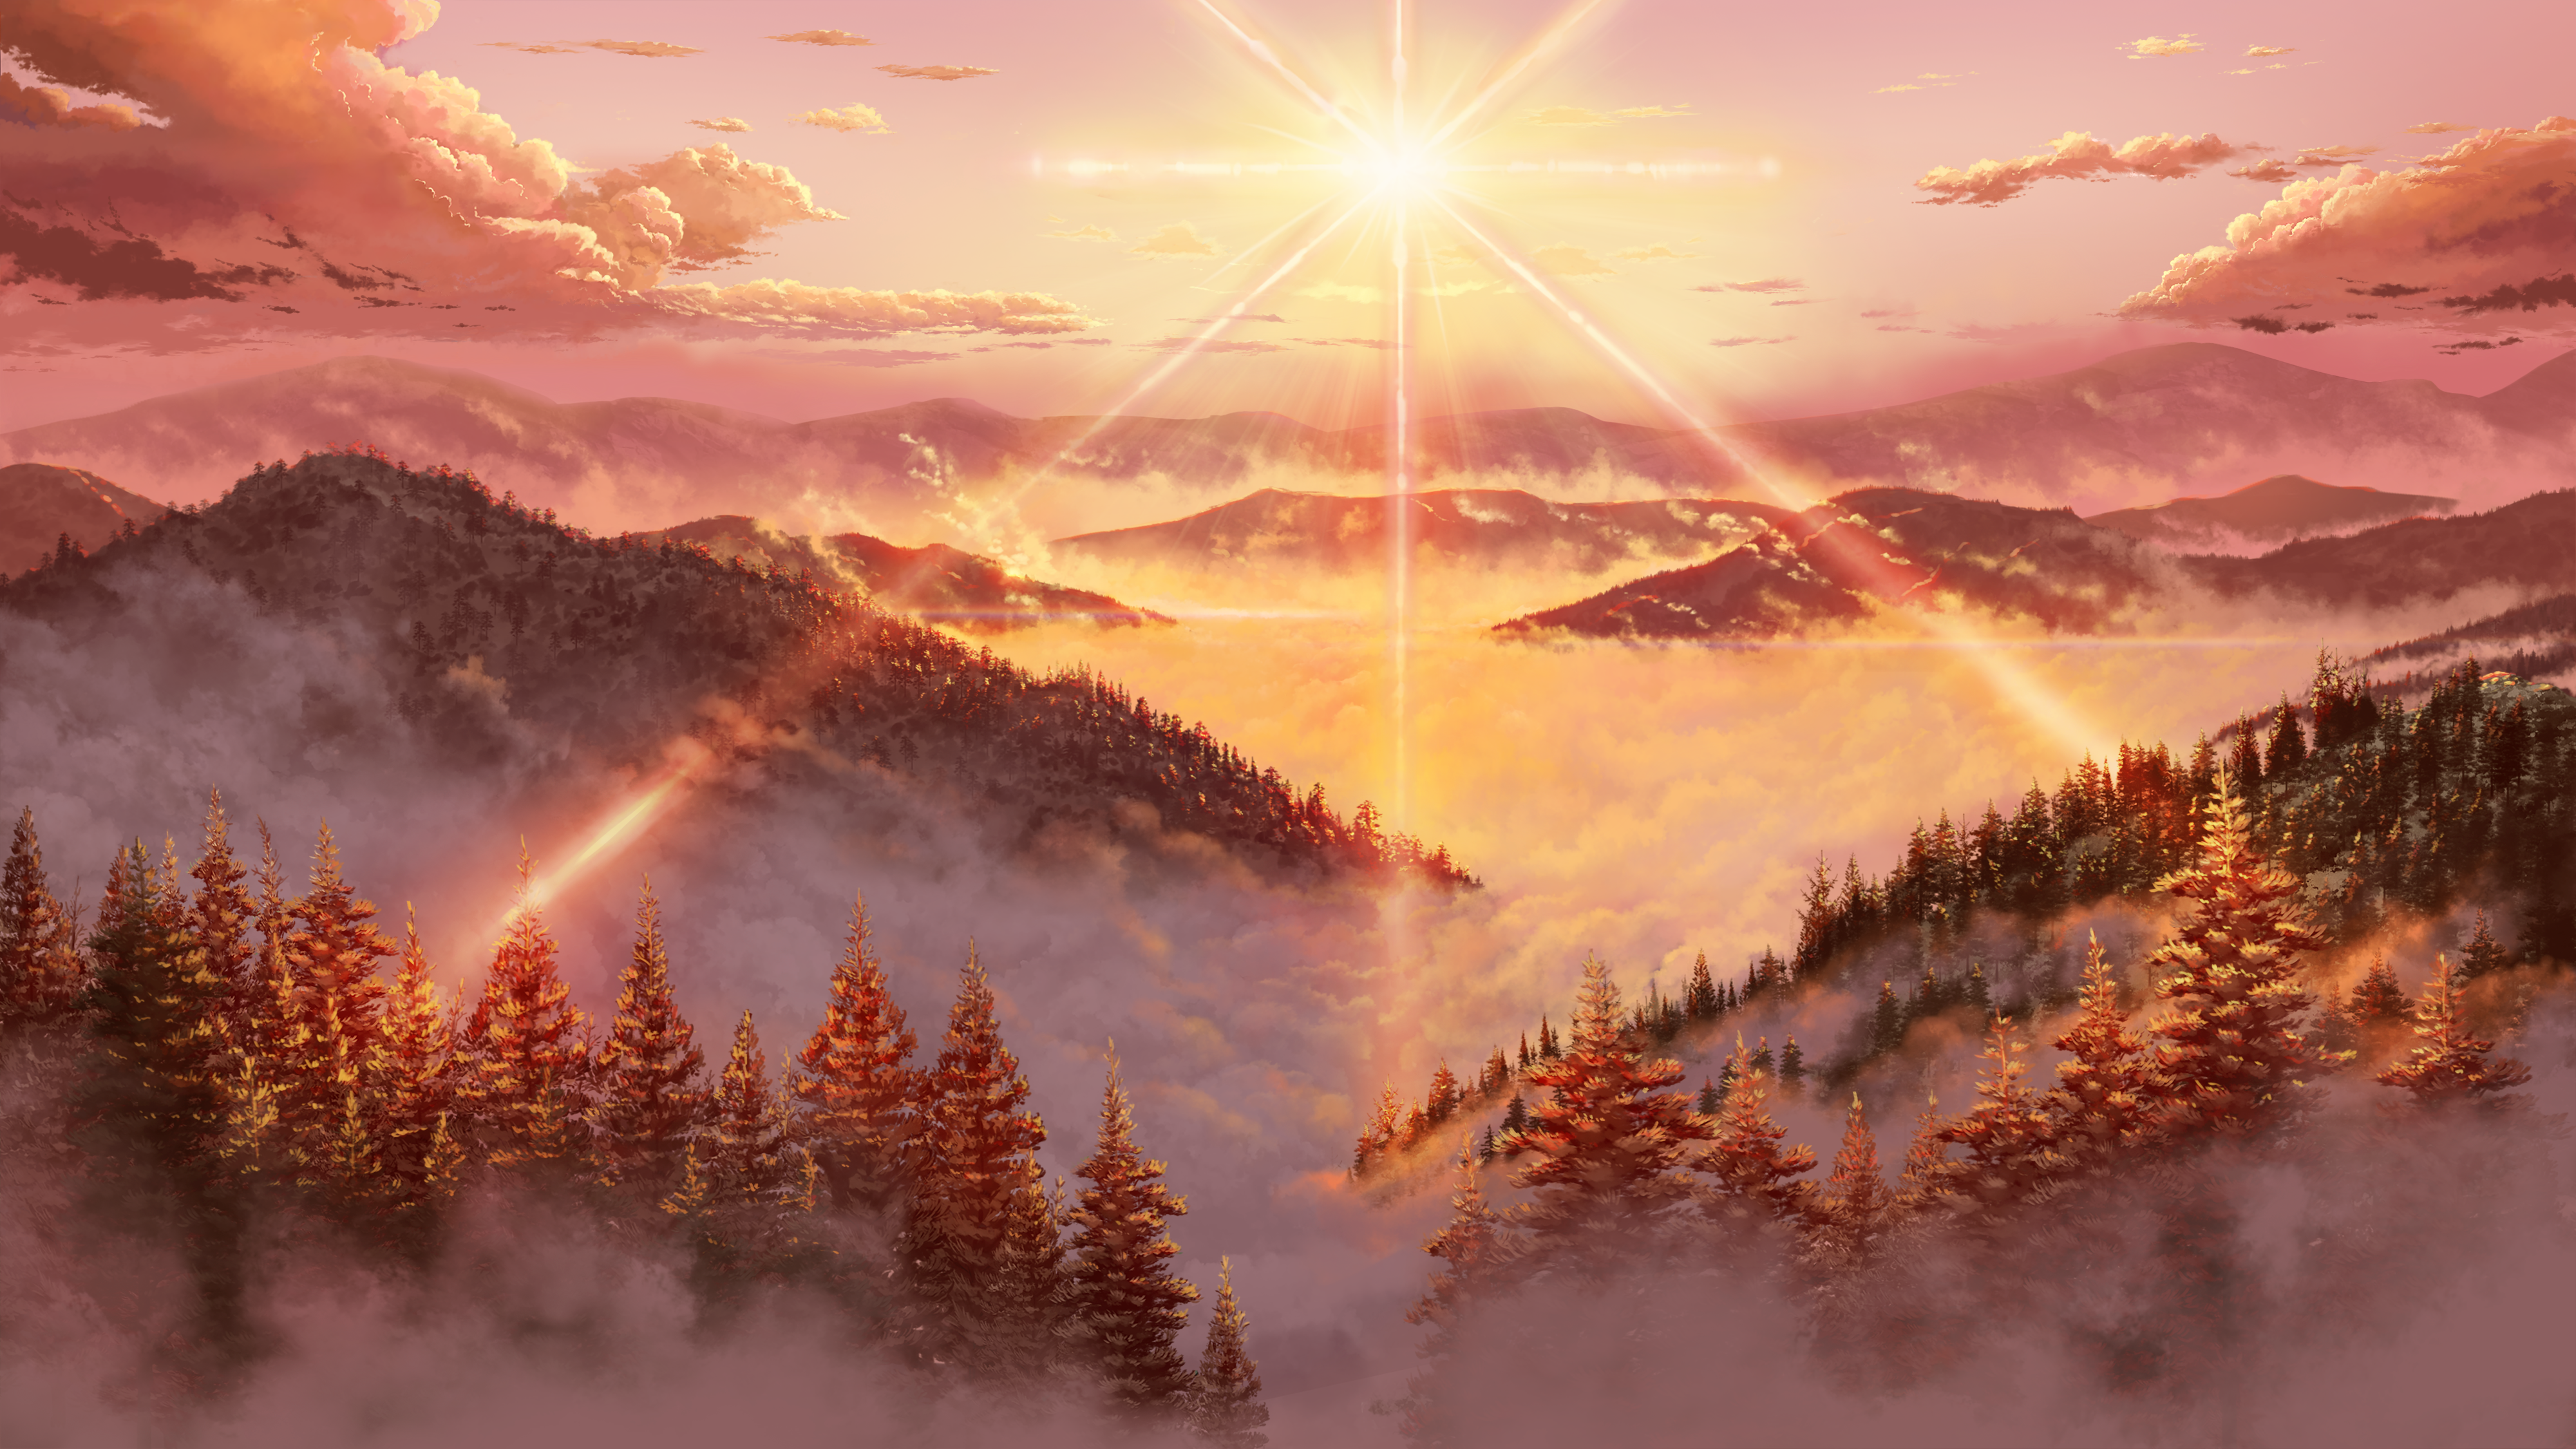 Digital Art Artwork Illustration Landscape Mountains Forest Trees Sun Sky Clouds Sun Rays Nature Sun 4000x2250